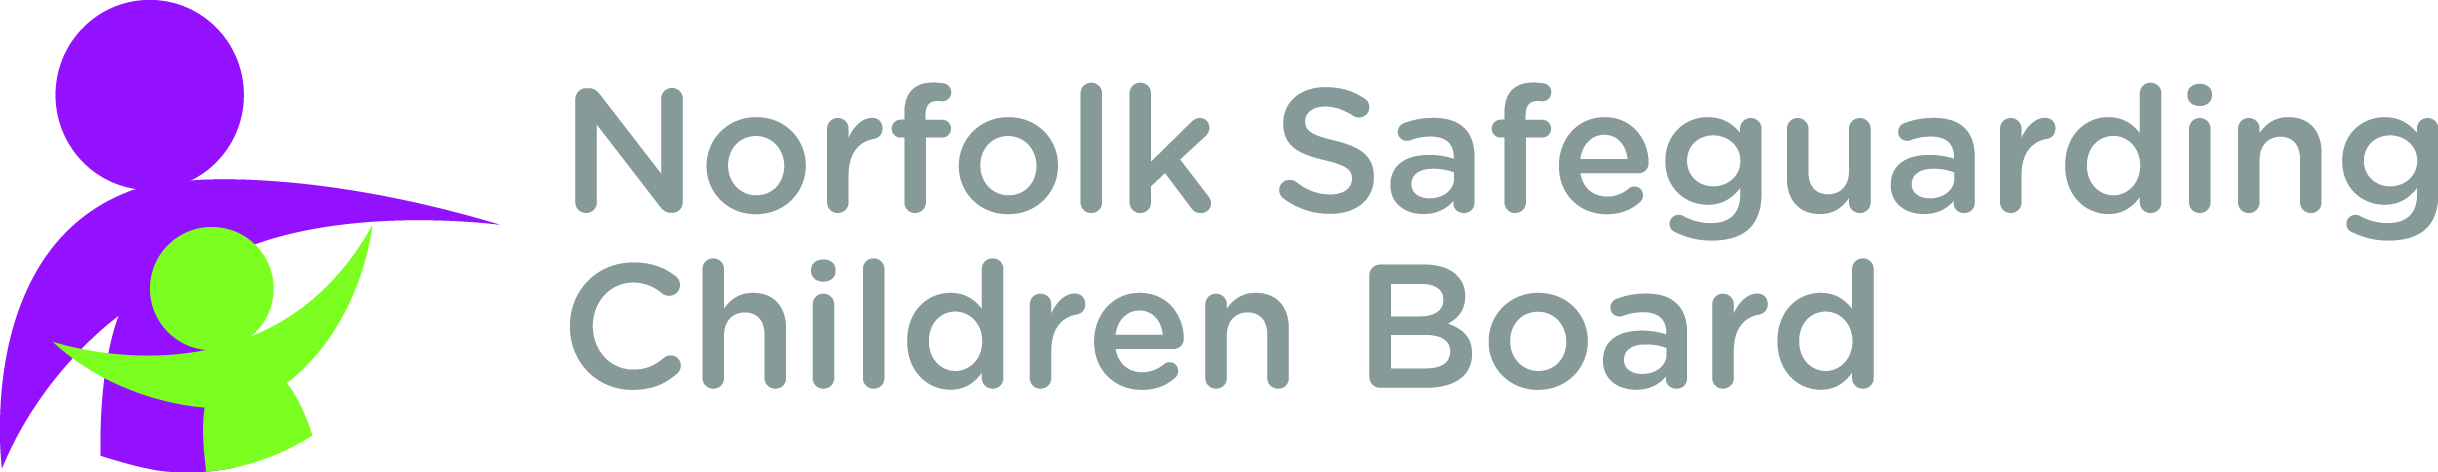 Norfolk Safeguarding Children Board logo